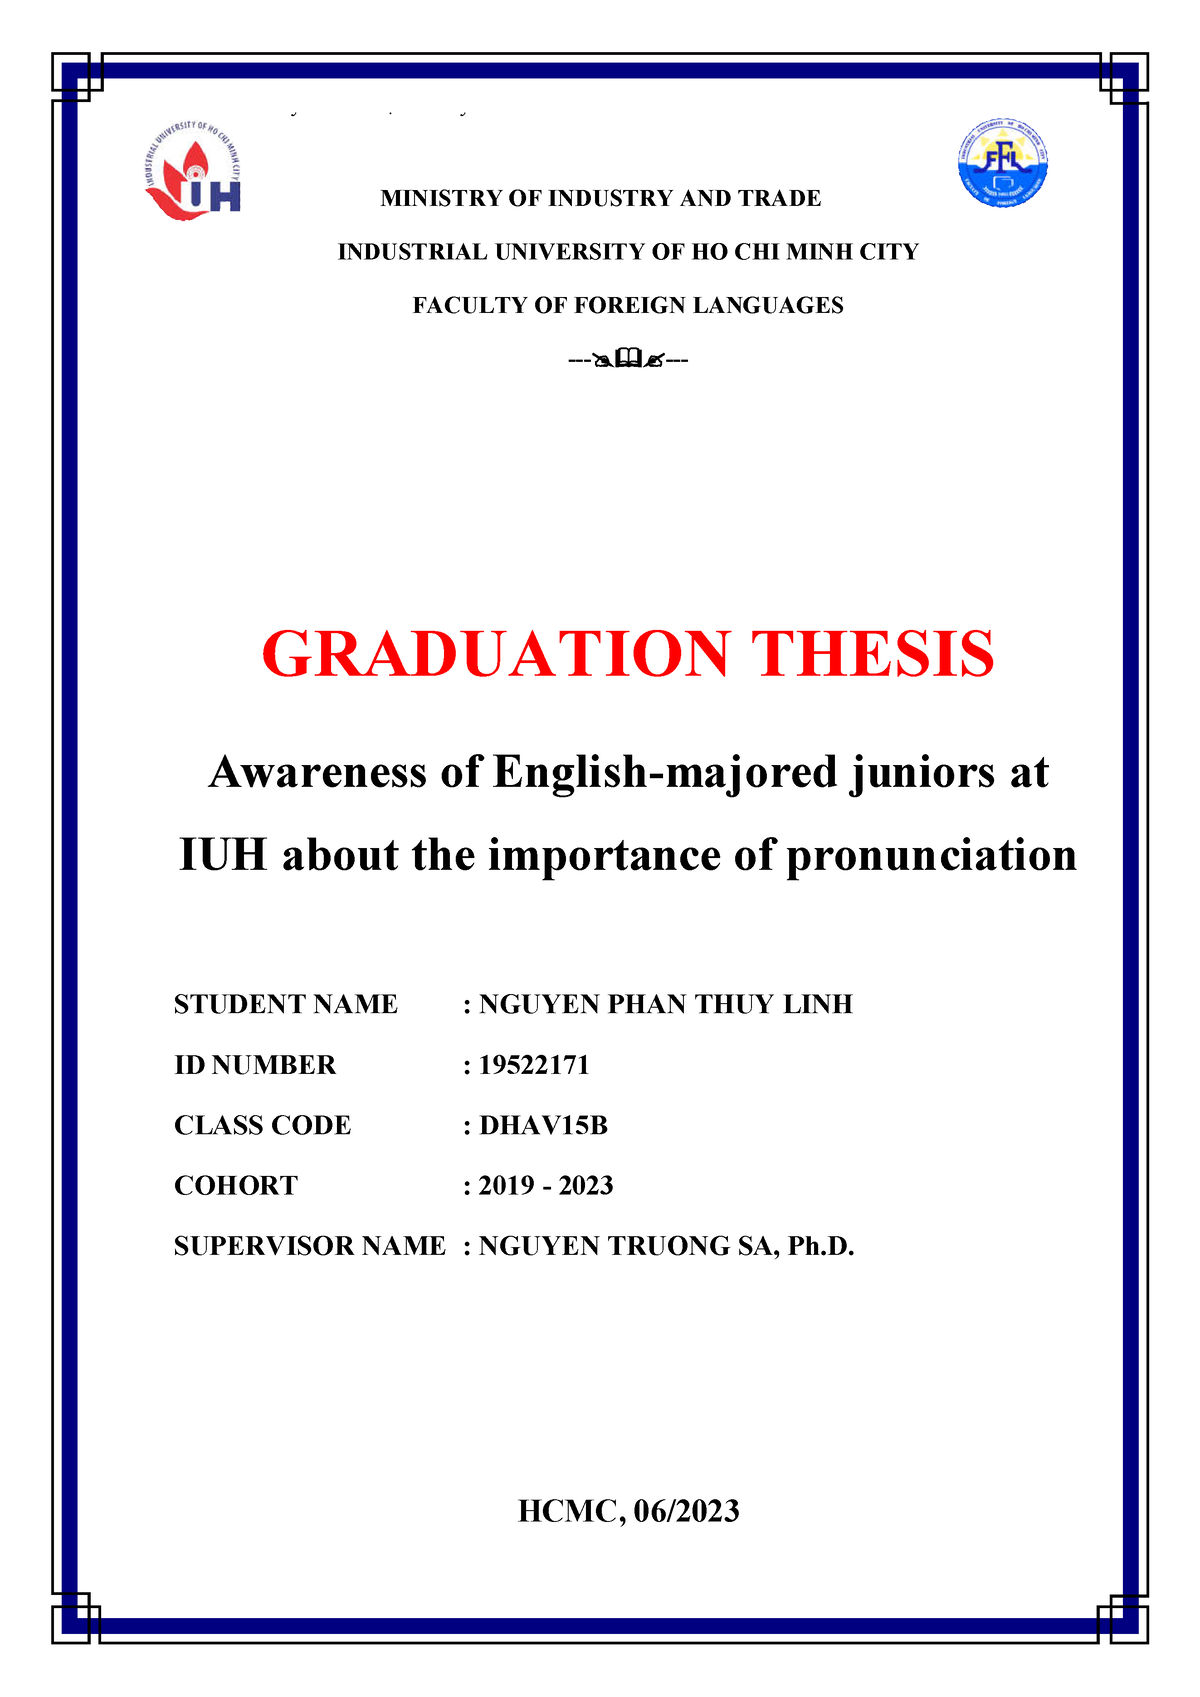 graduation thesis tue